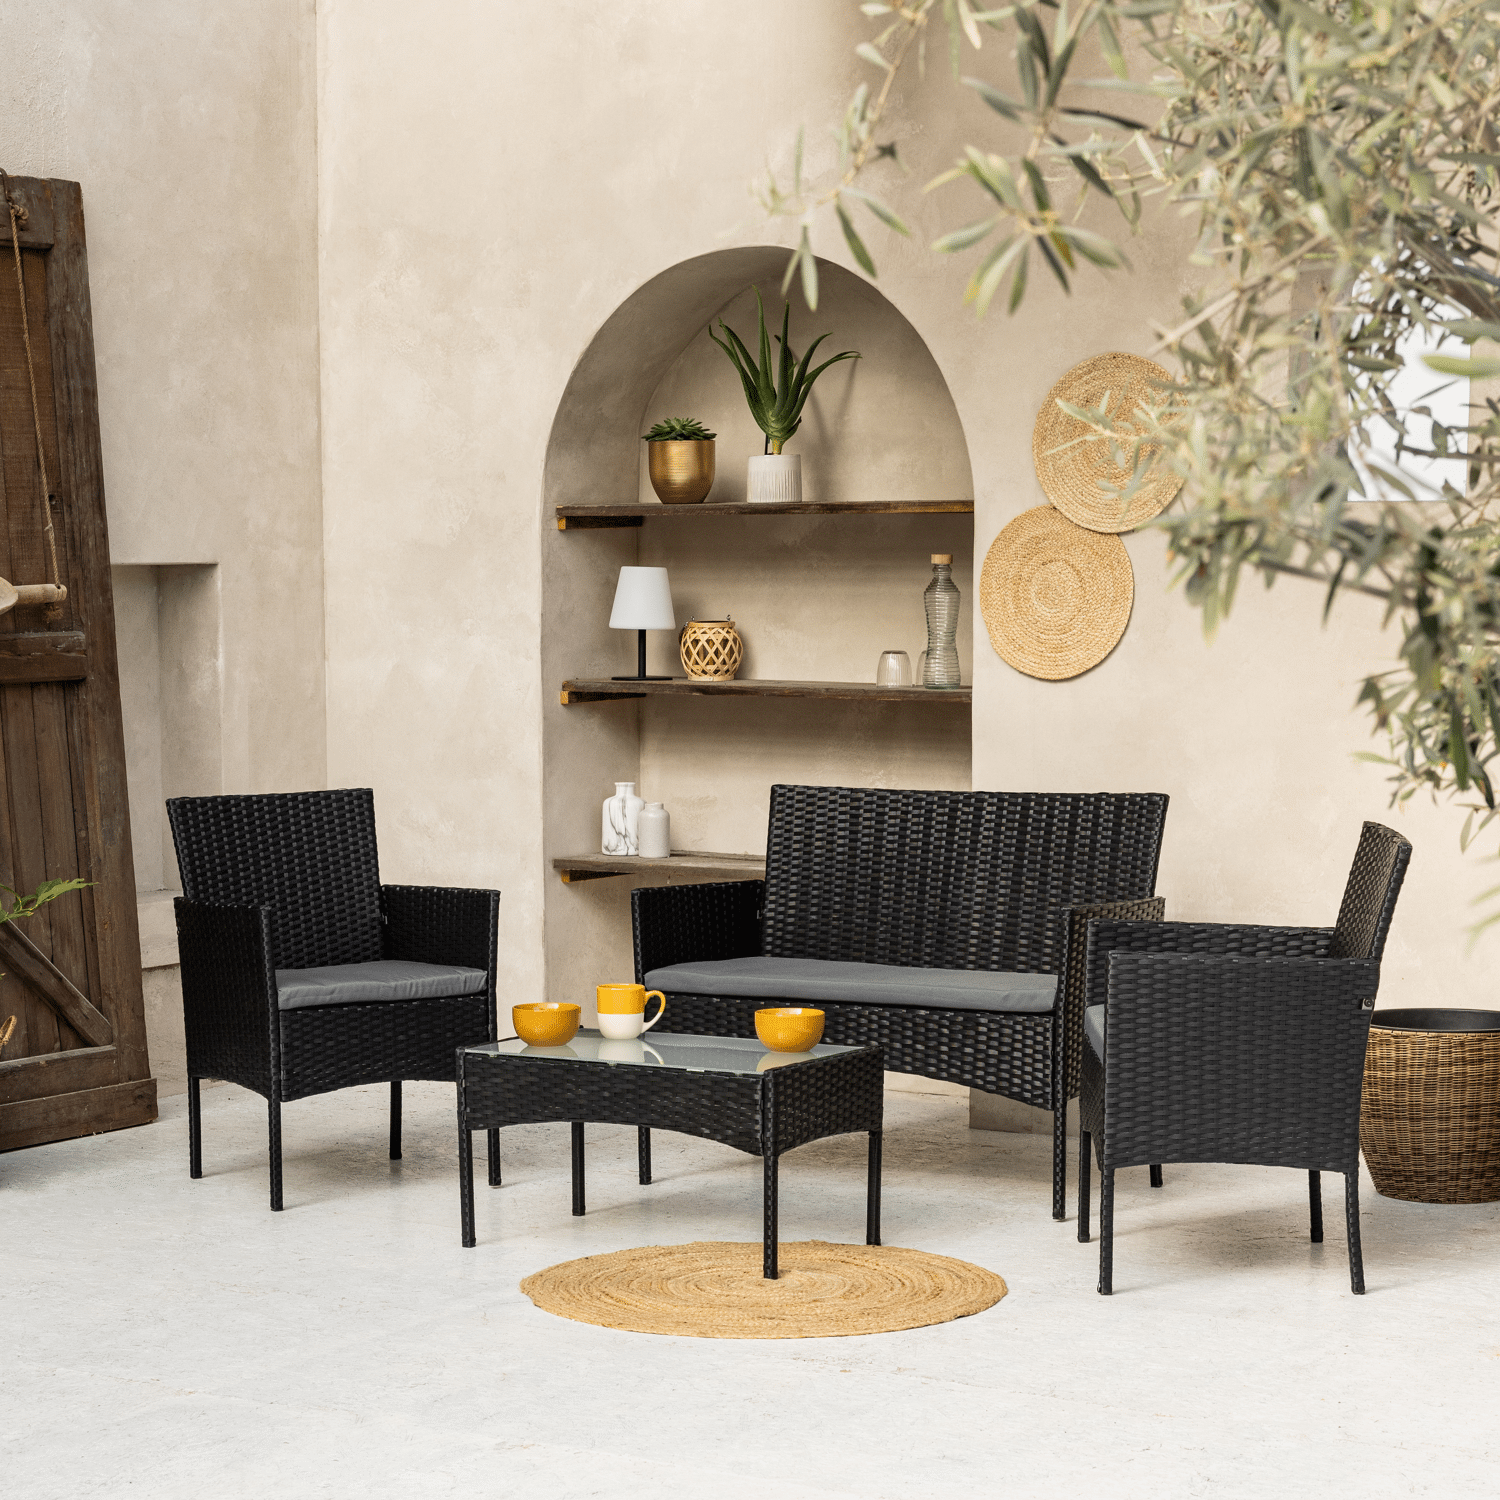 Gartenmöbel CORDOUE aus schwarzem Harzgeflecht, 4 Sitzplätze - graue Kissen